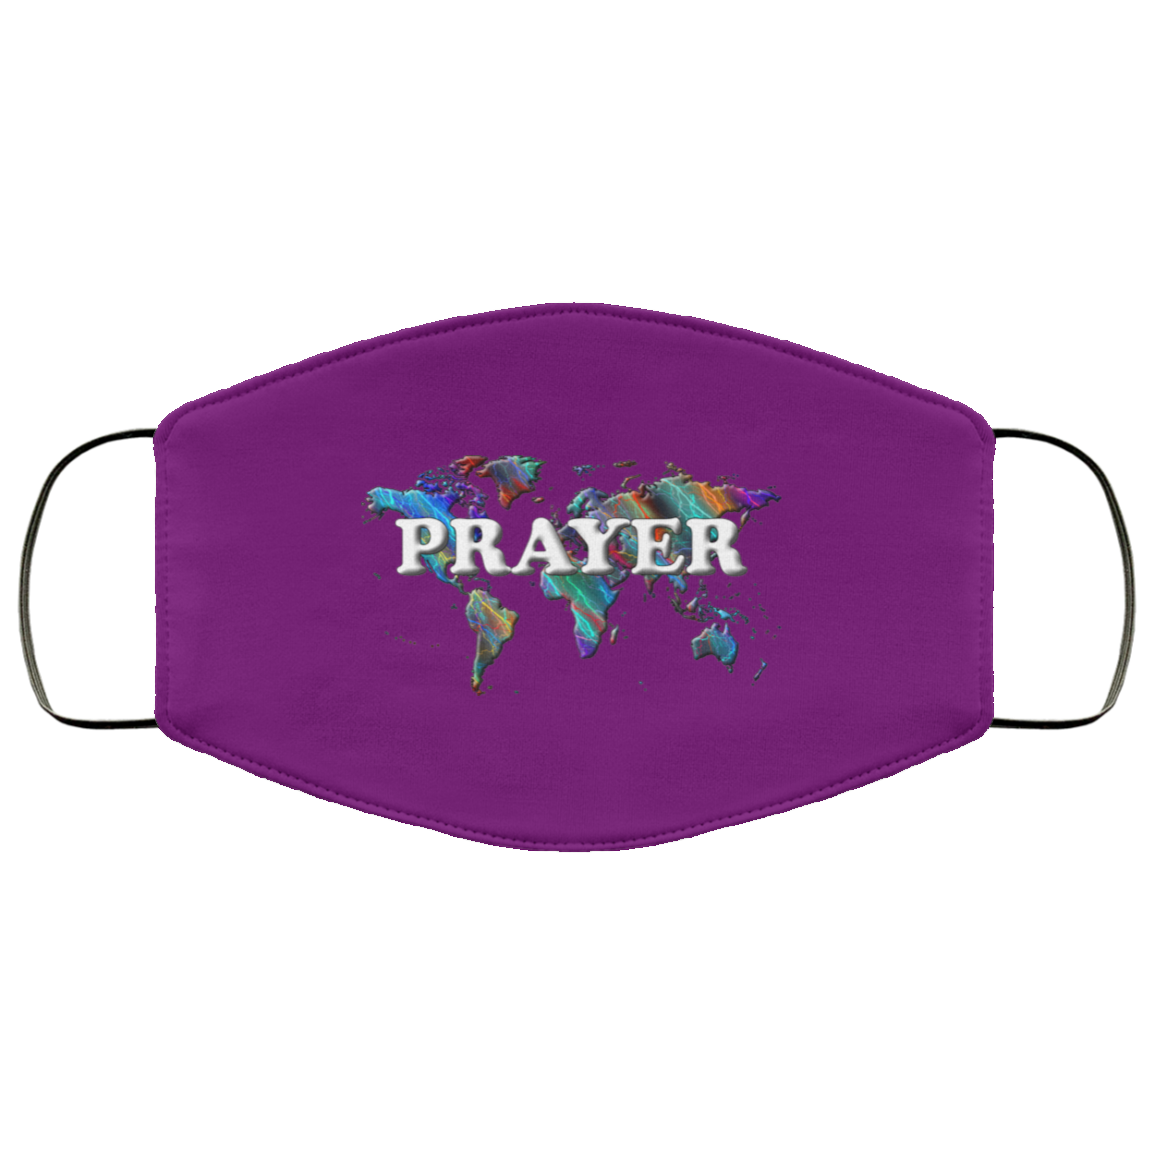 Prayer 2 Layer Protective Mask